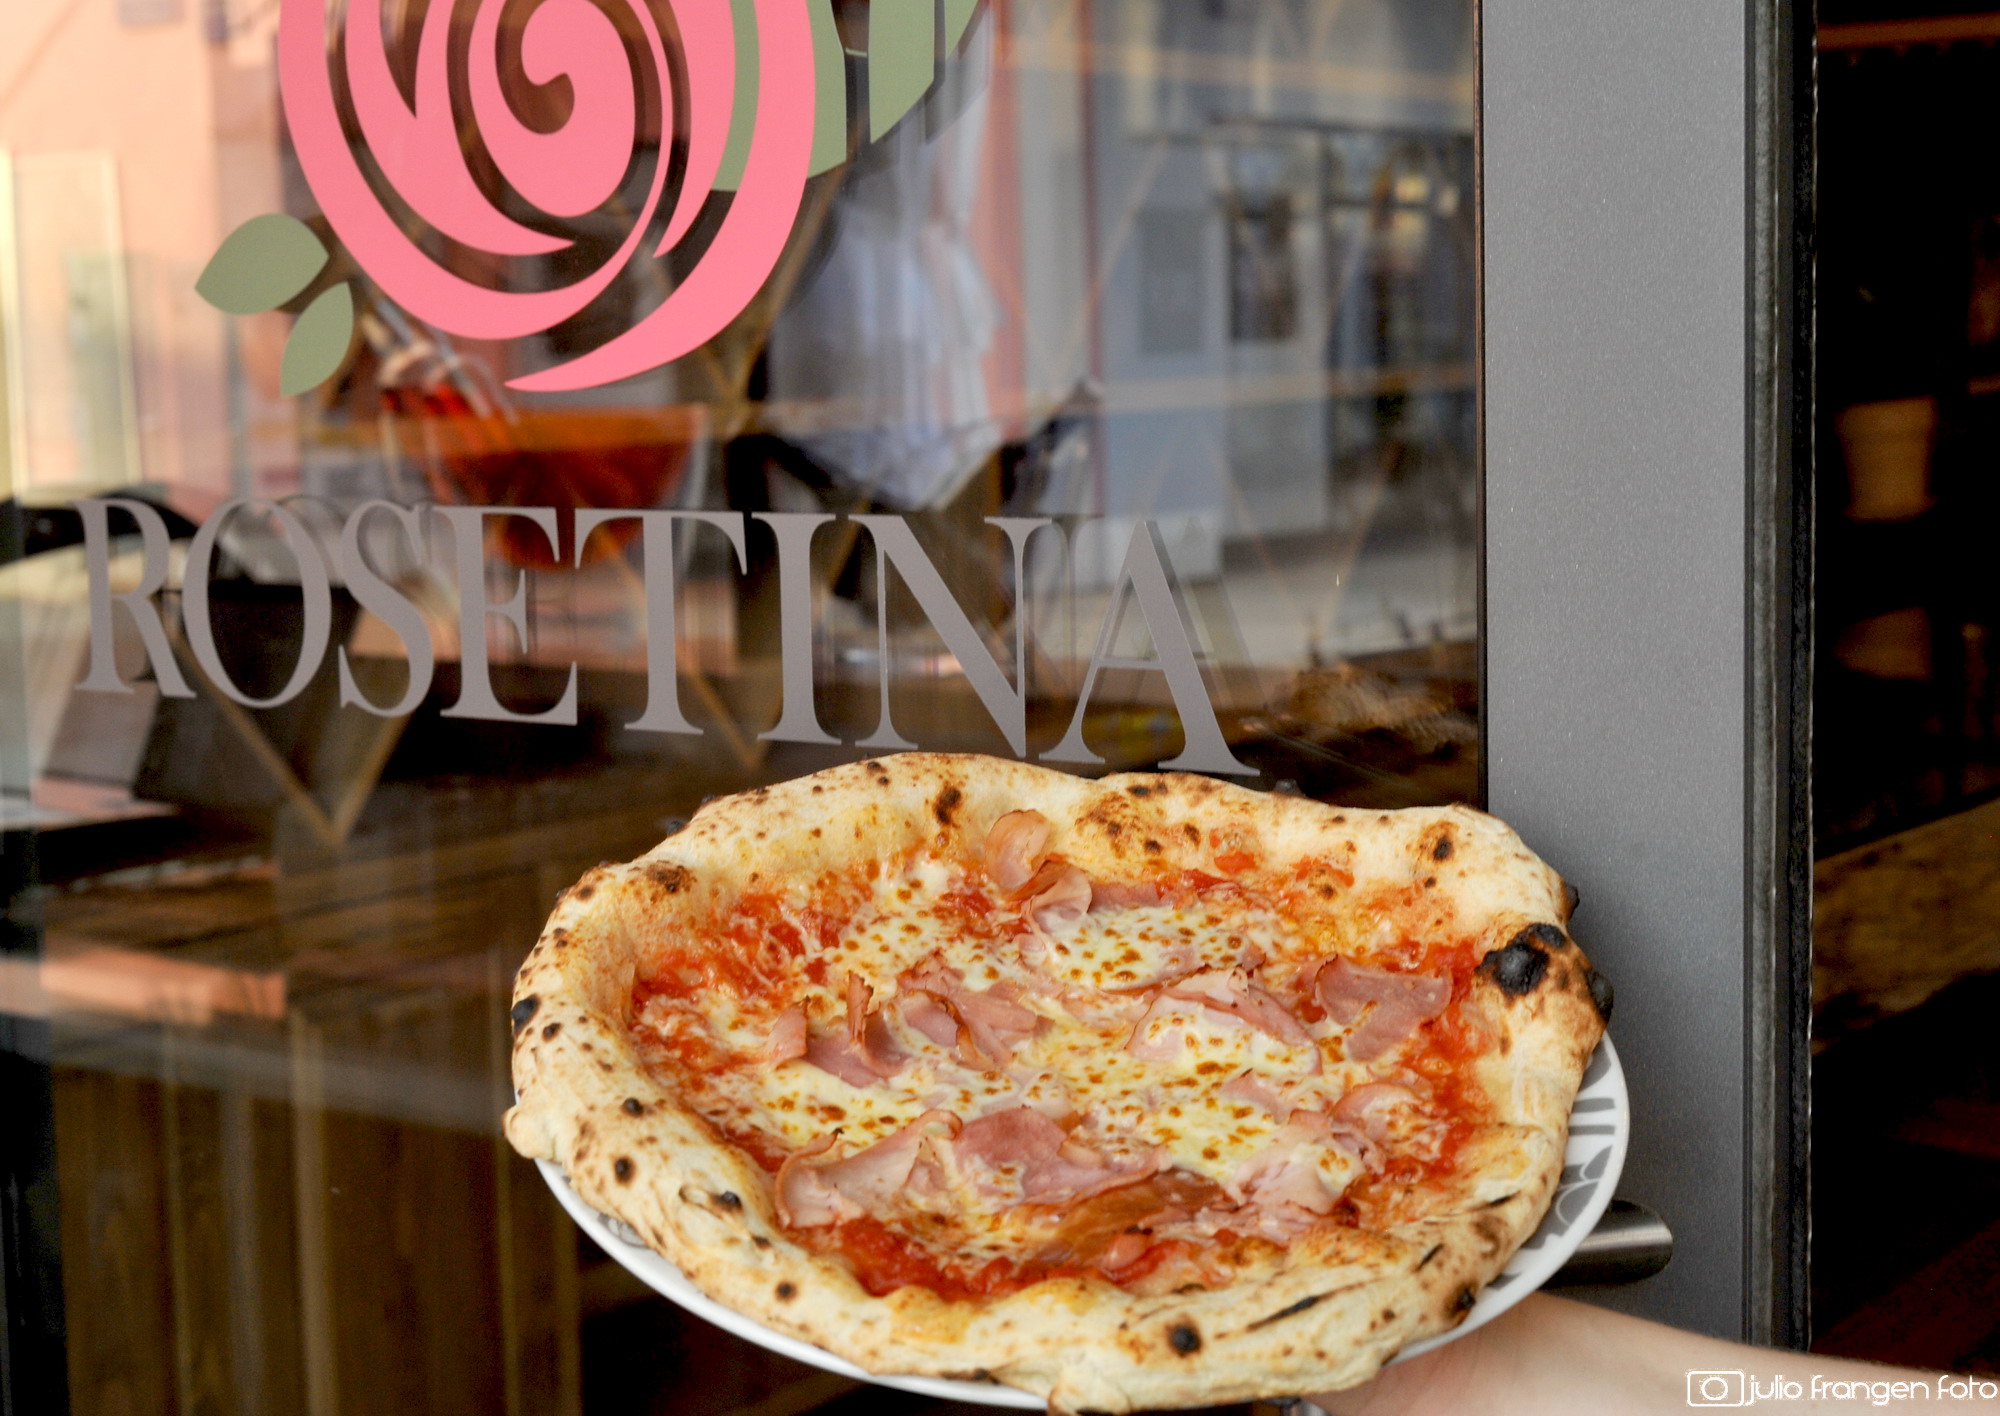 Rosetina – nova pizza fina!